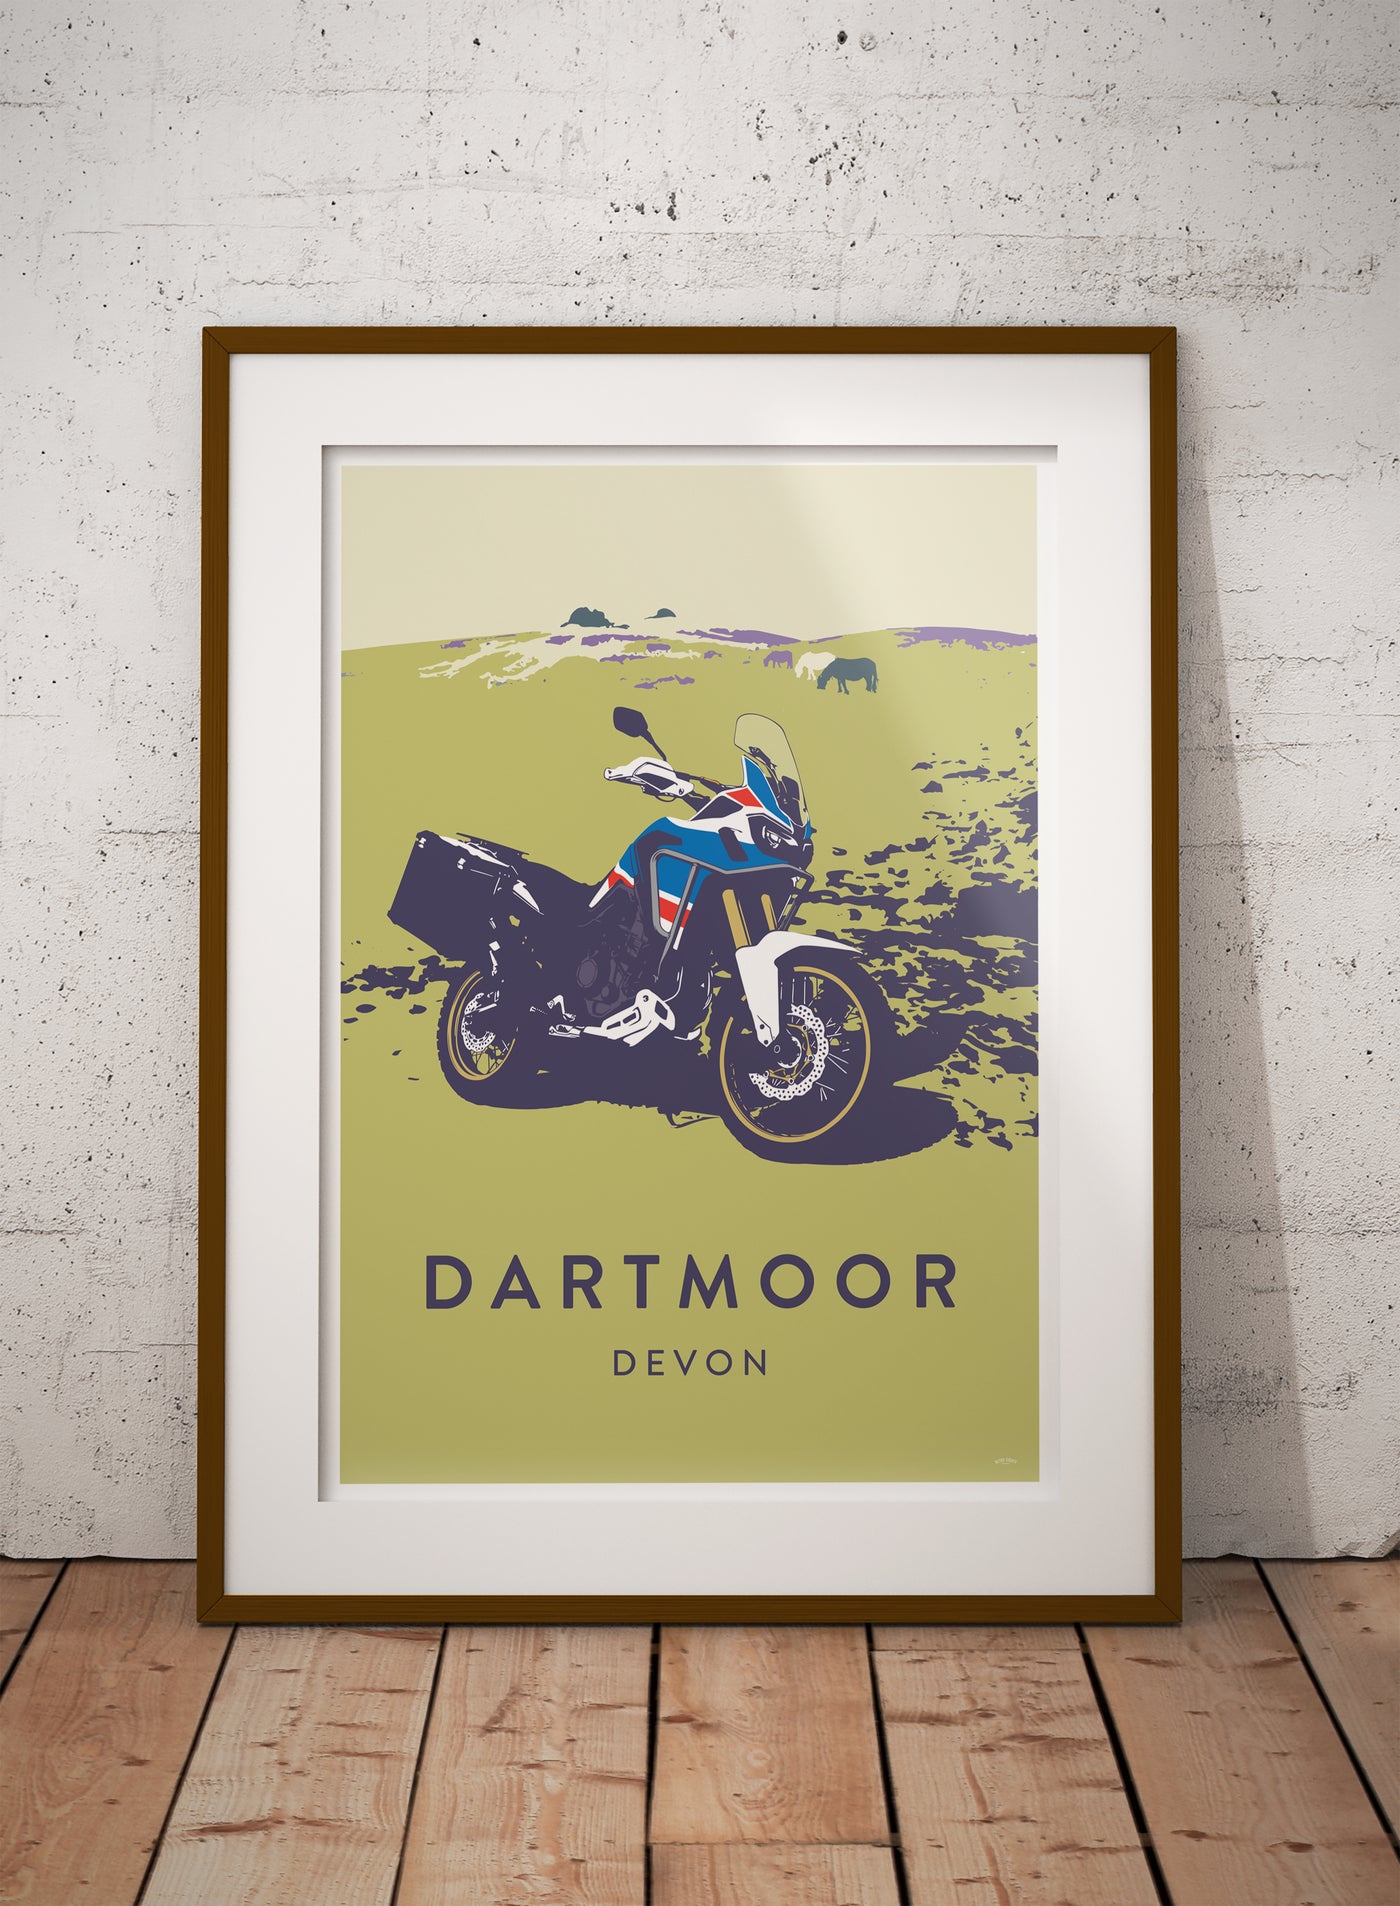 Honda Africa Twin Dartmoor travel poster print